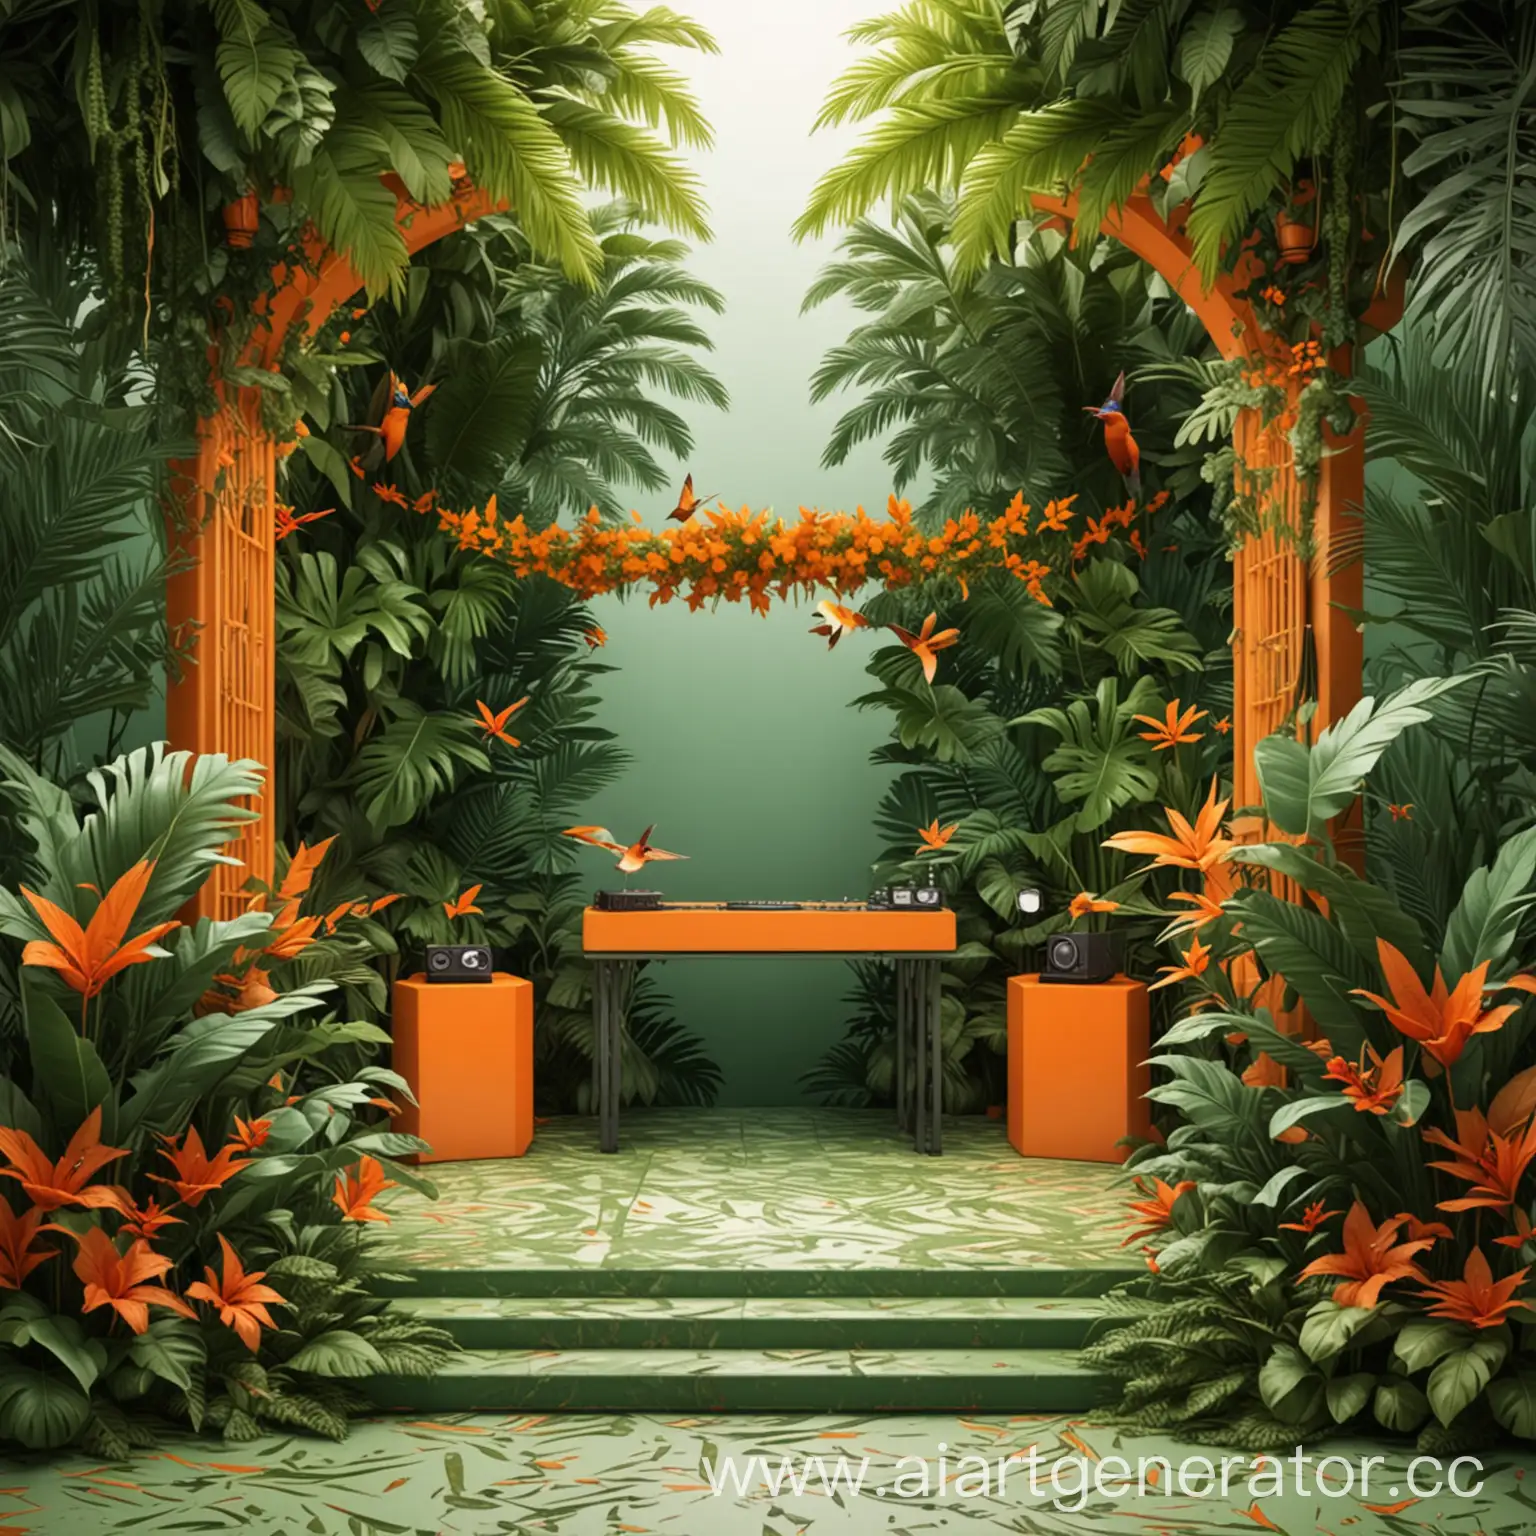 Tropical-Veranda-with-DJ-Booth-Amidst-Vibrant-Foliage-and-Hummingbird